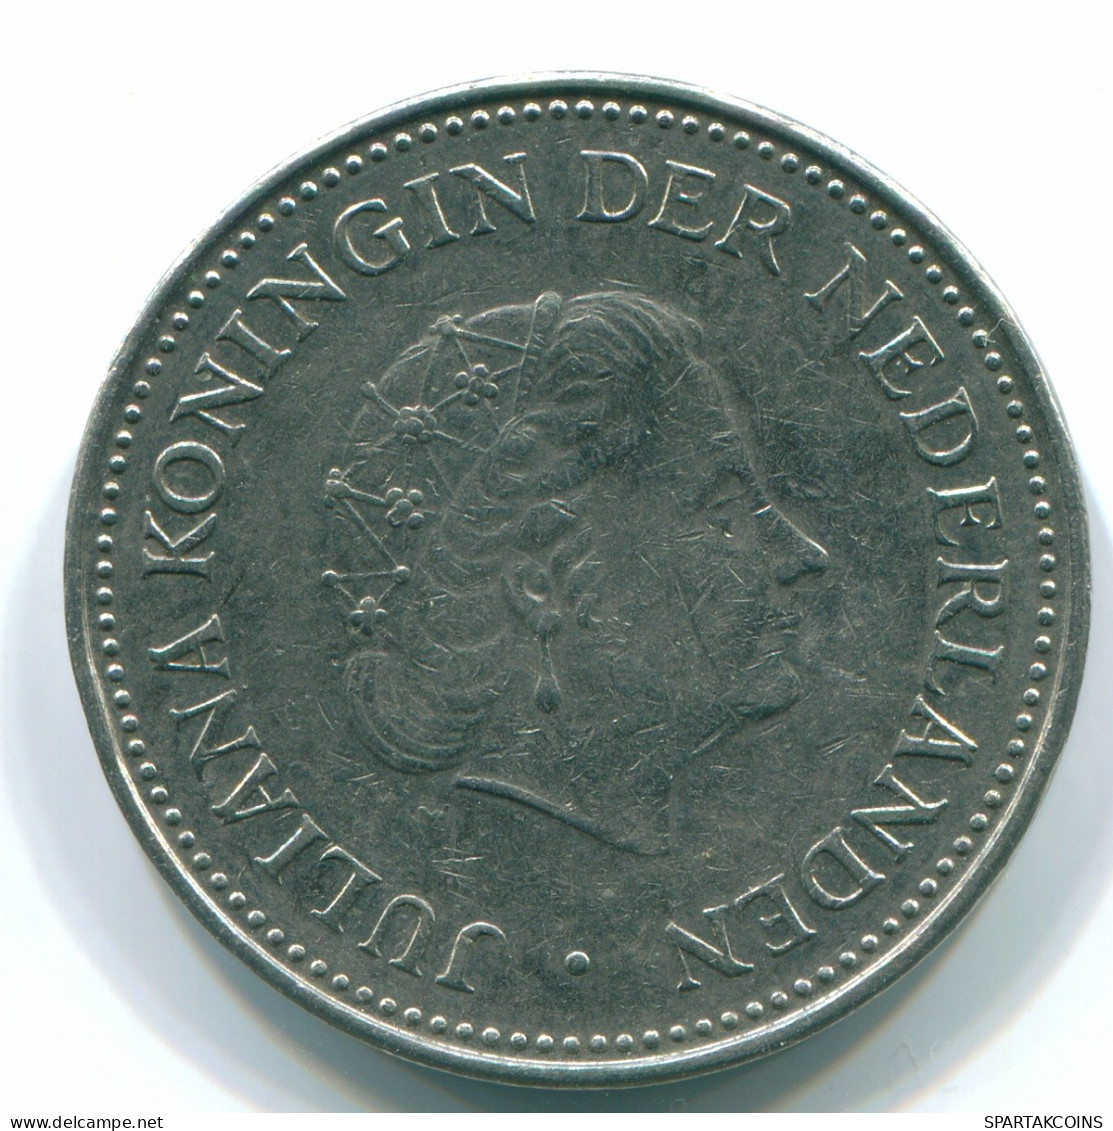 1 GULDEN 1971 NETHERLANDS ANTILLES Nickel Colonial Coin #S11992.U.A - Netherlands Antilles